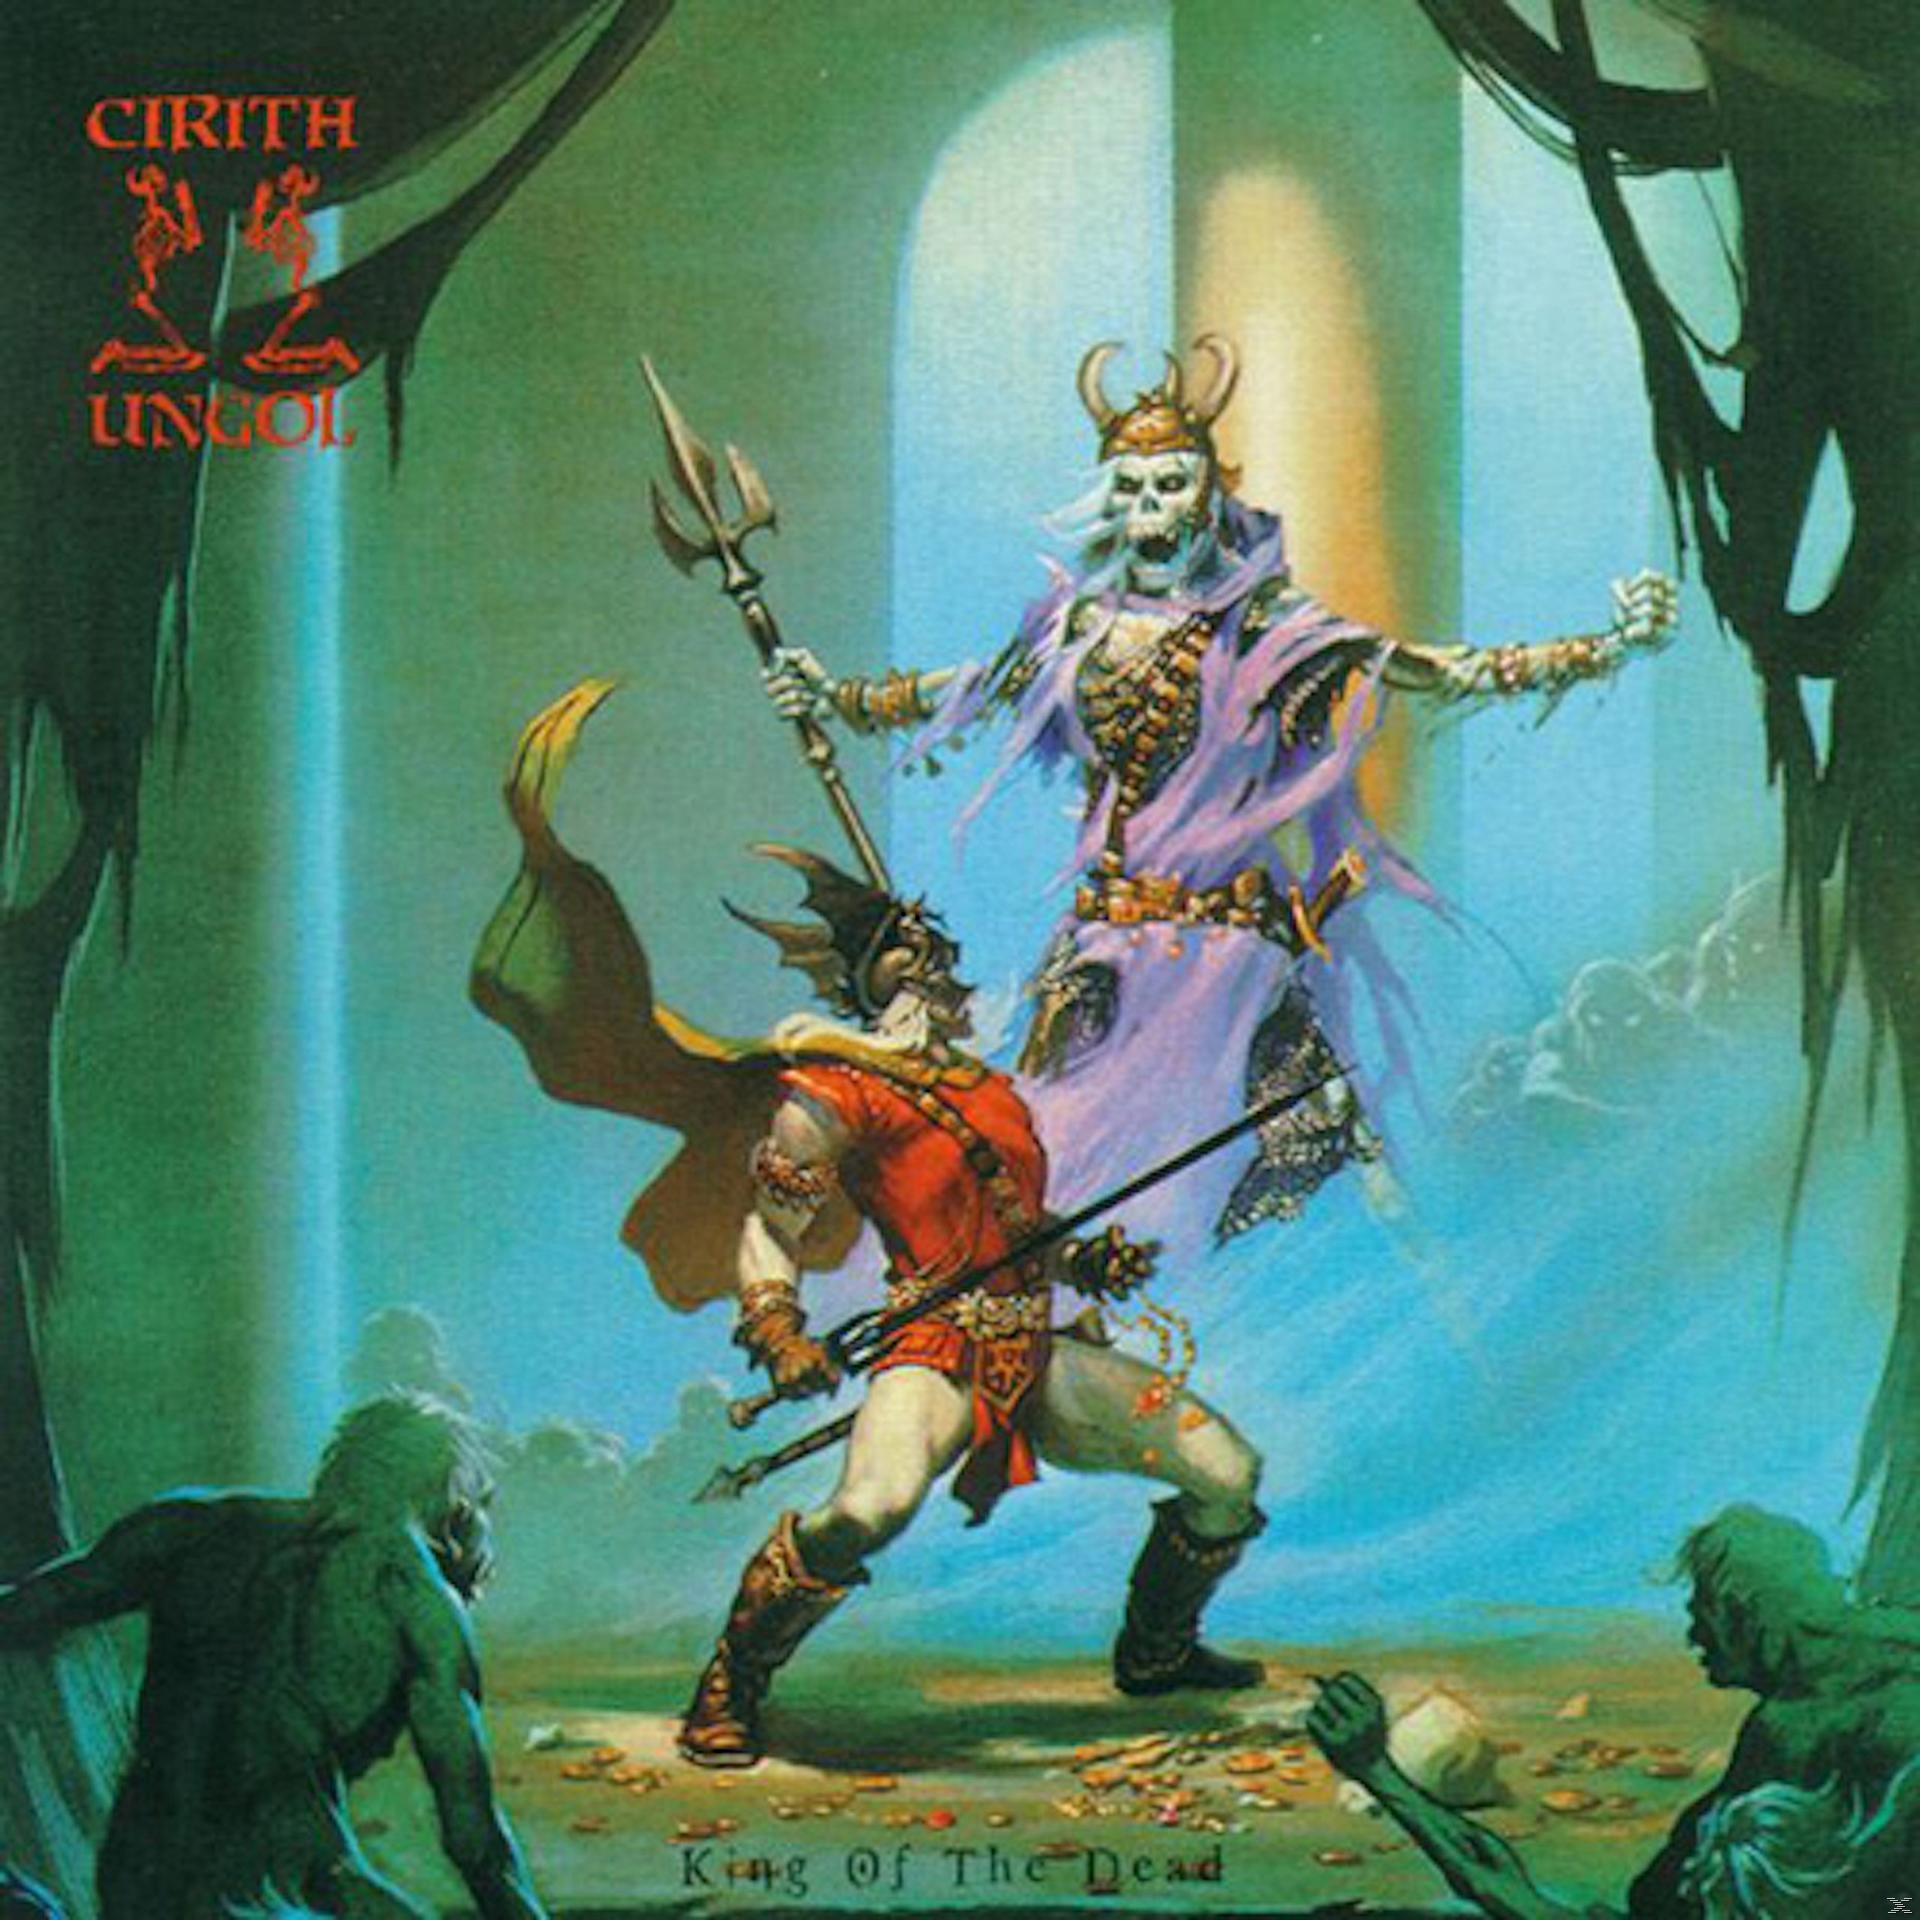 King - the Vinyl Dead-180g - Ltd of Ed (Vinyl) Cirith Ungol Black